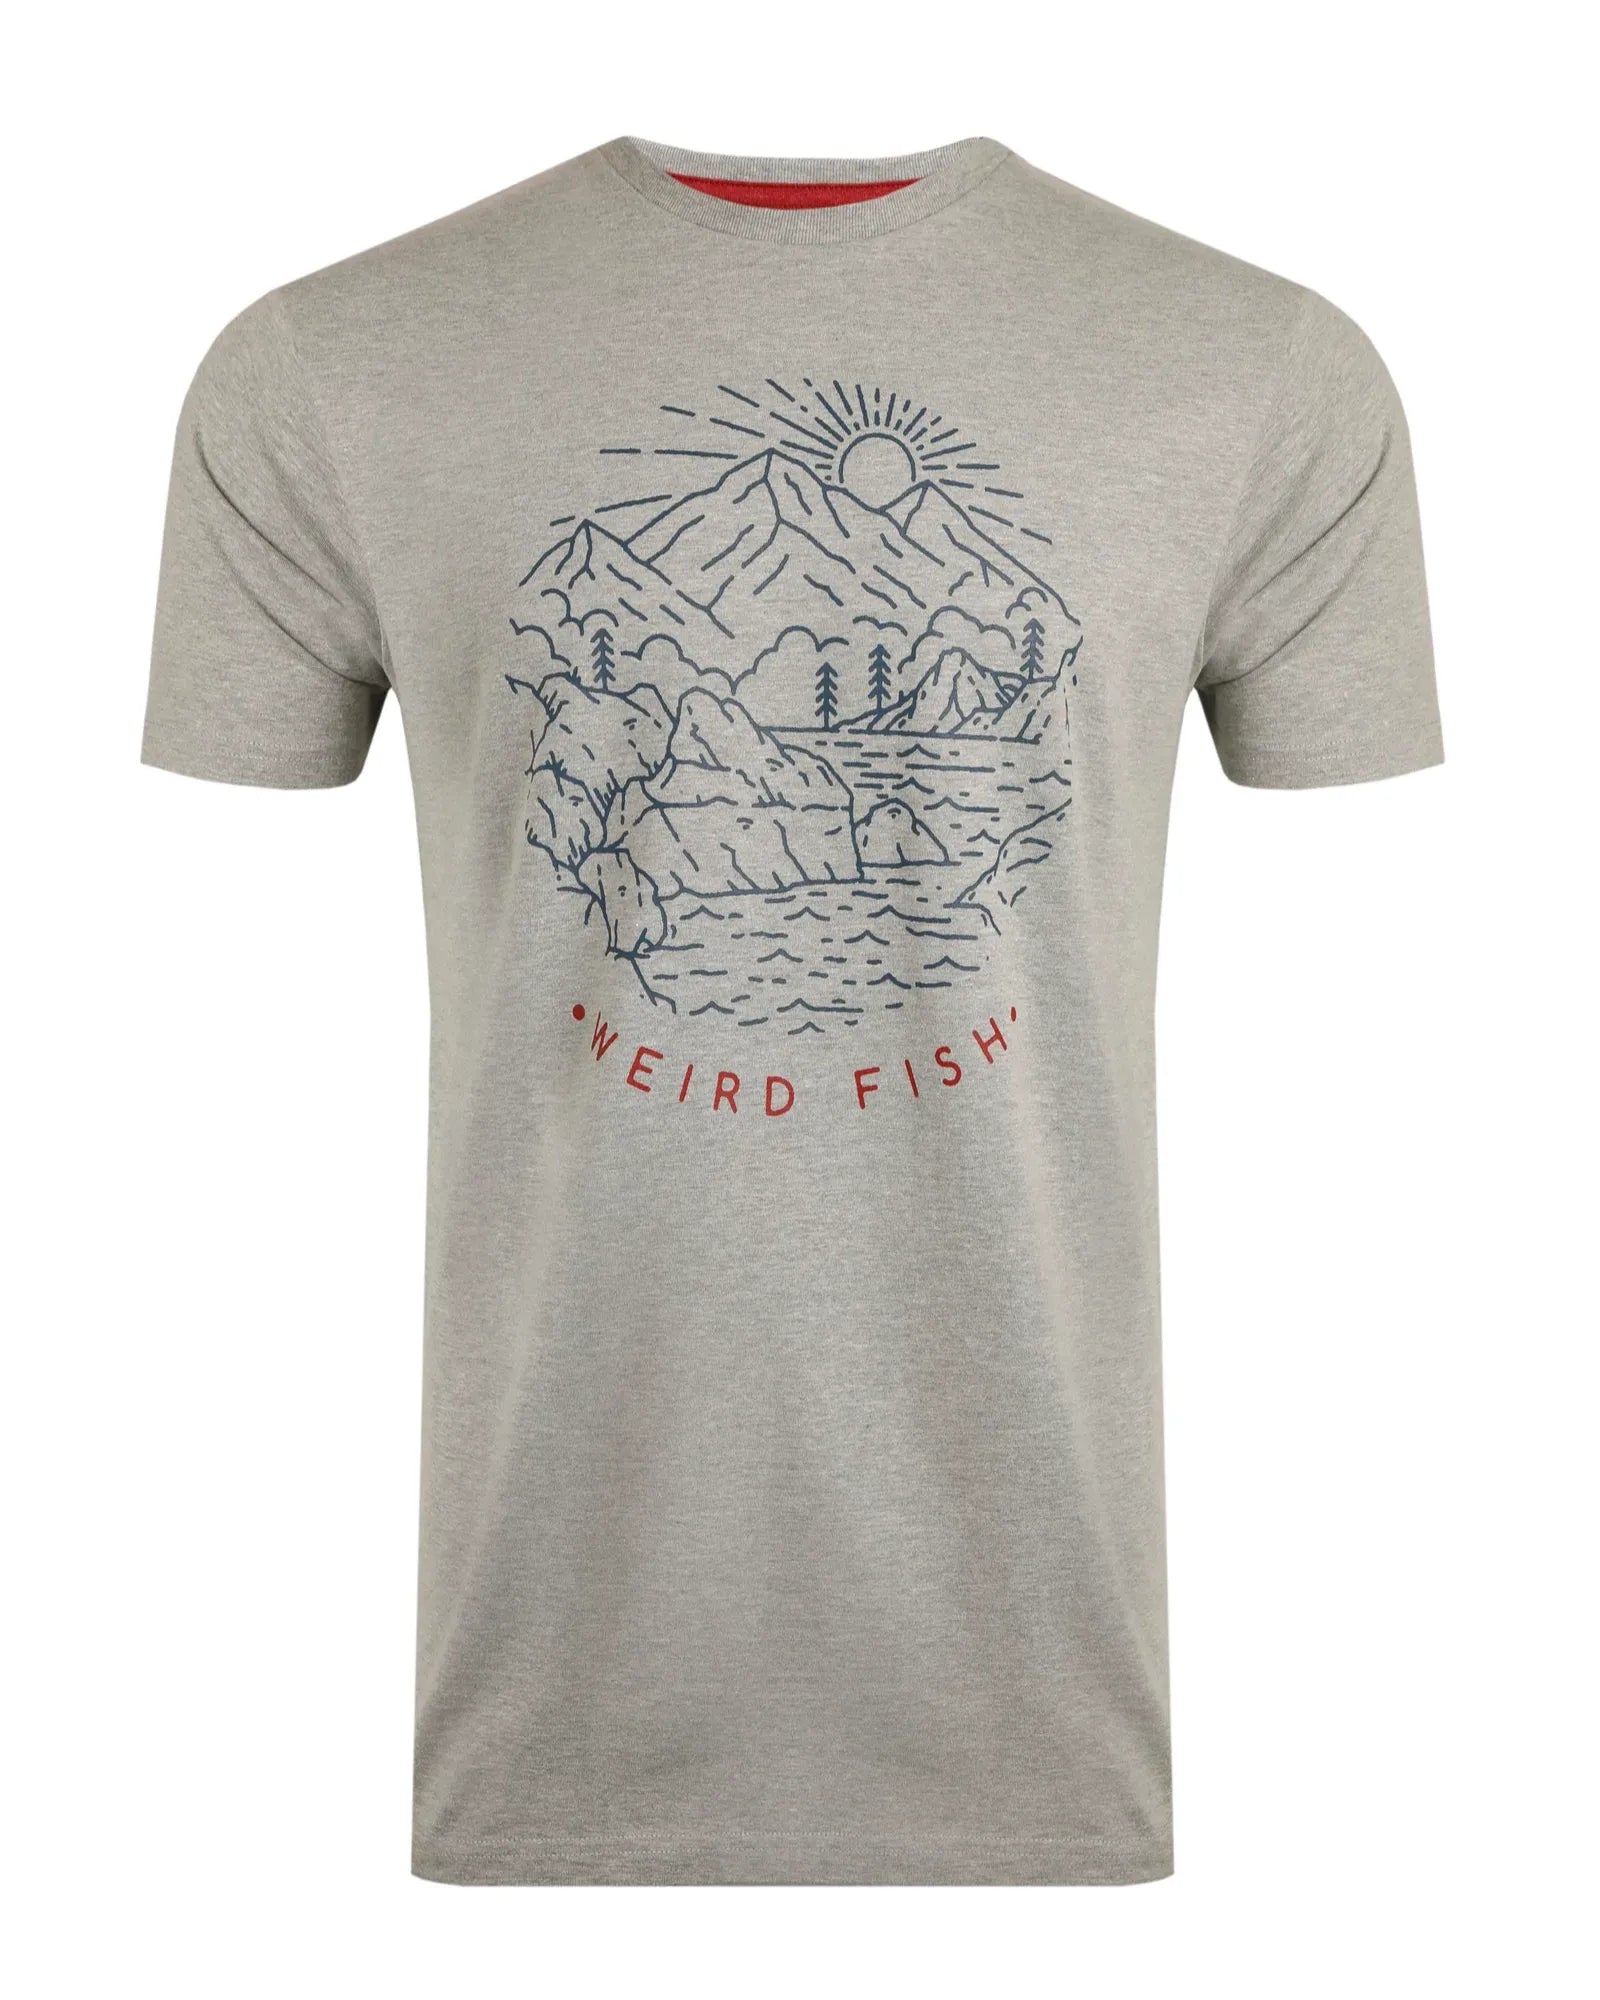 Lakes & Peaks Graphic T-Shirt - Grey Marl